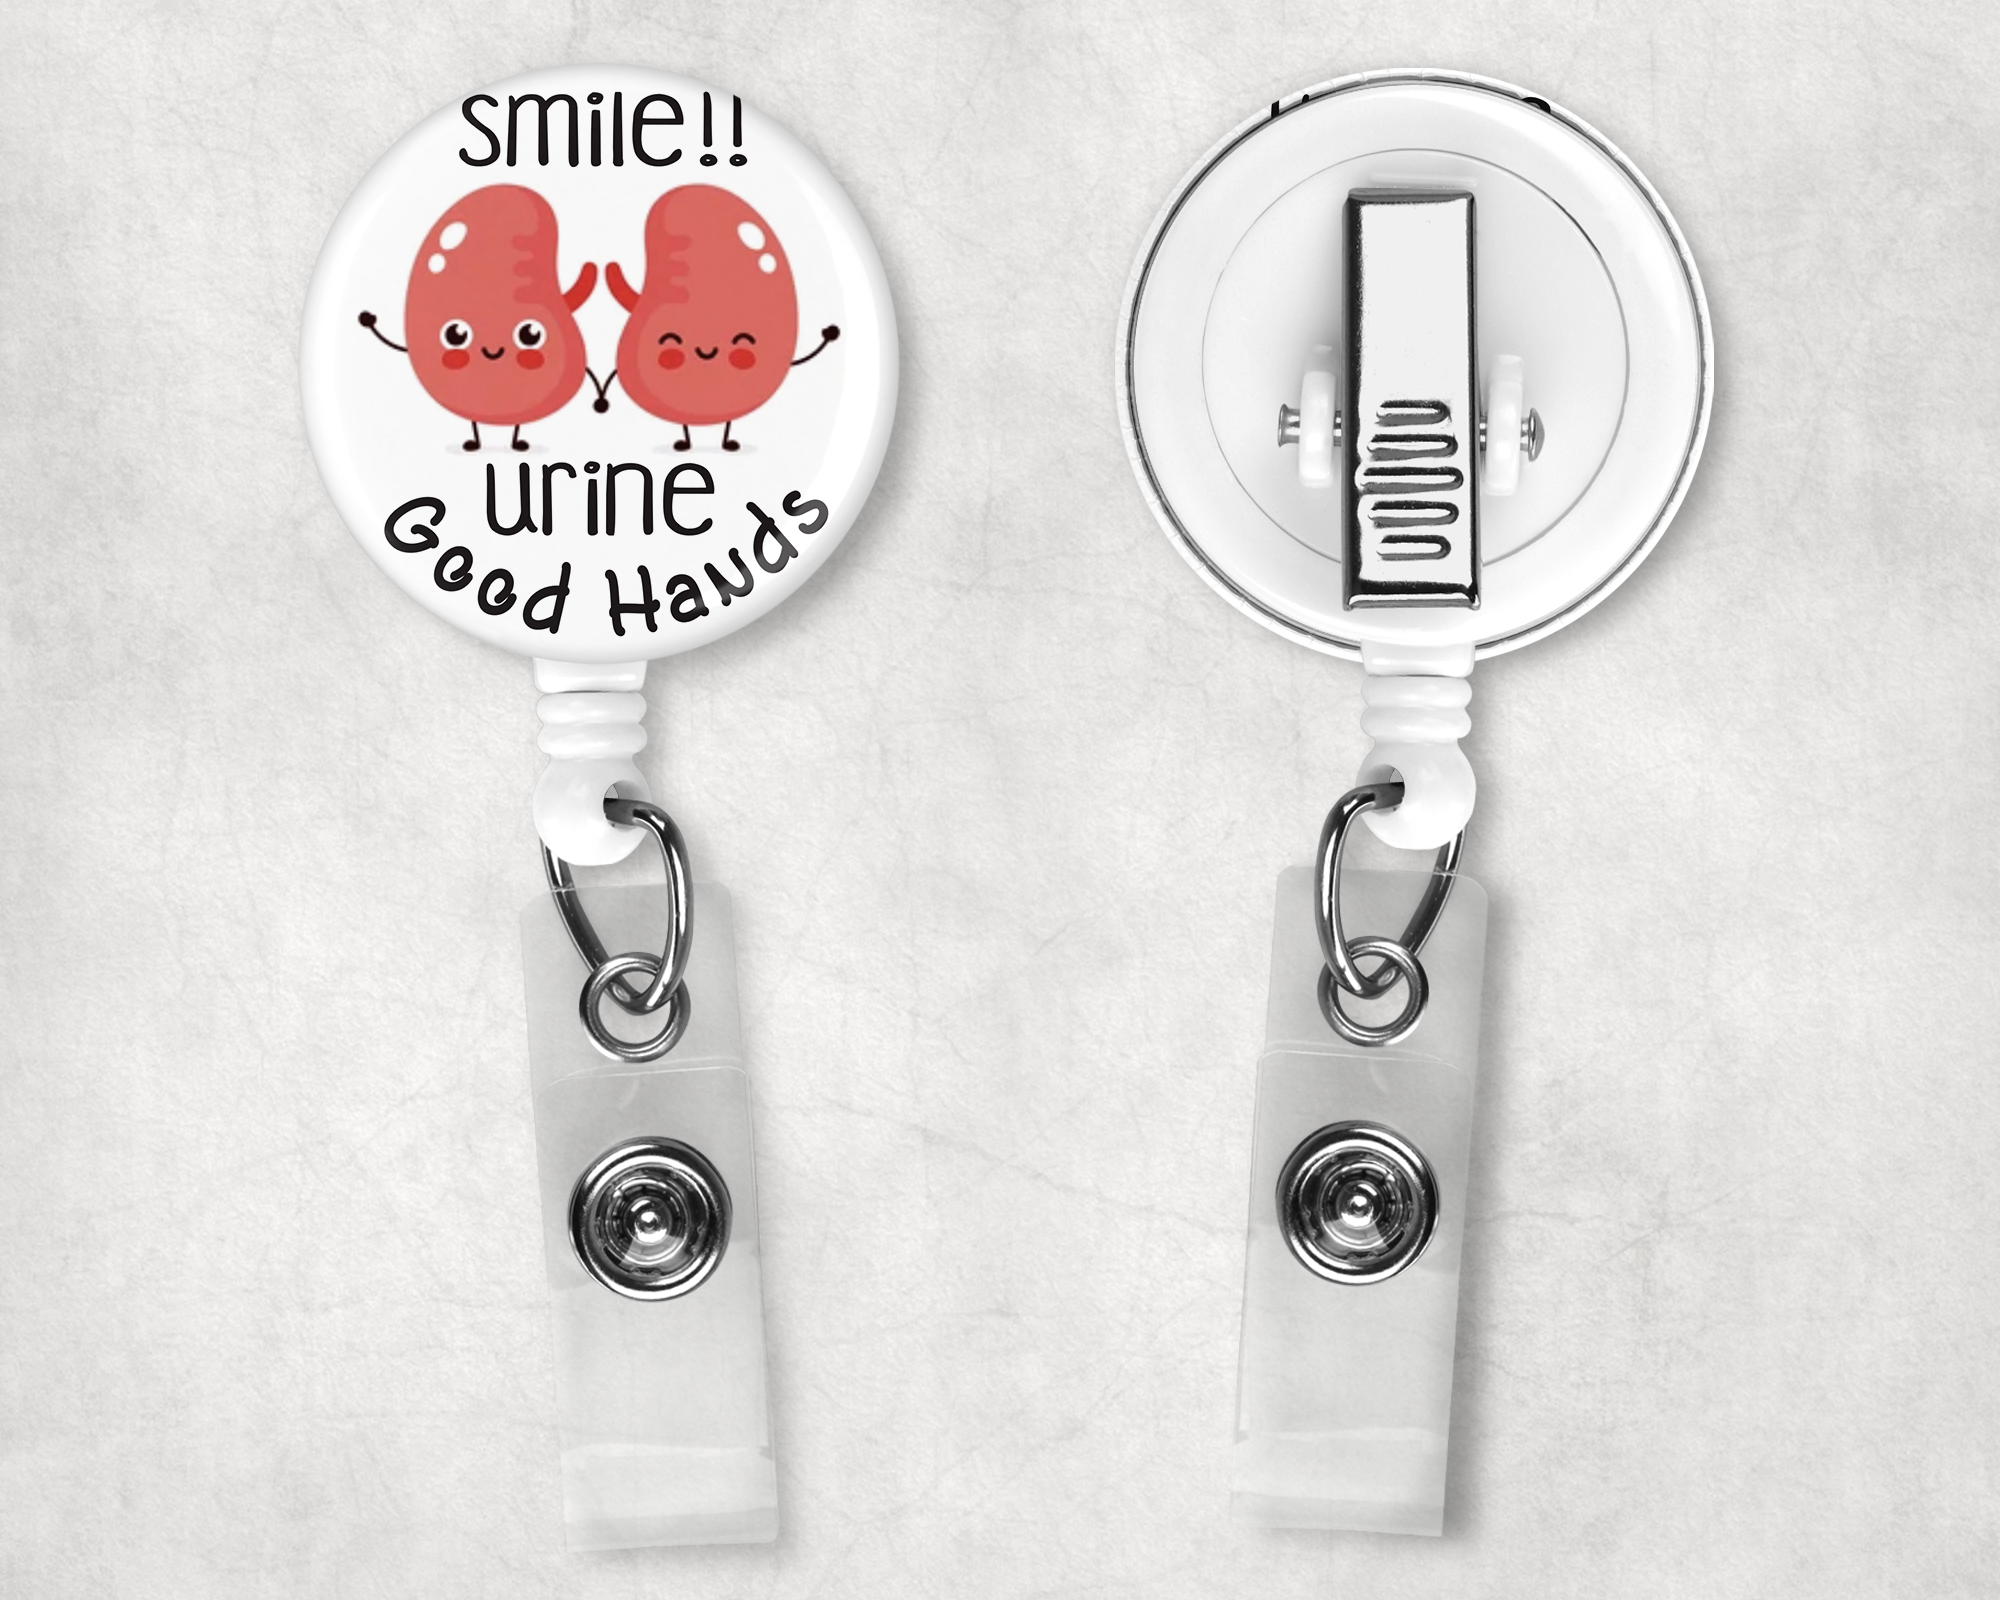 Smile Urine Good Hands Badge Reel